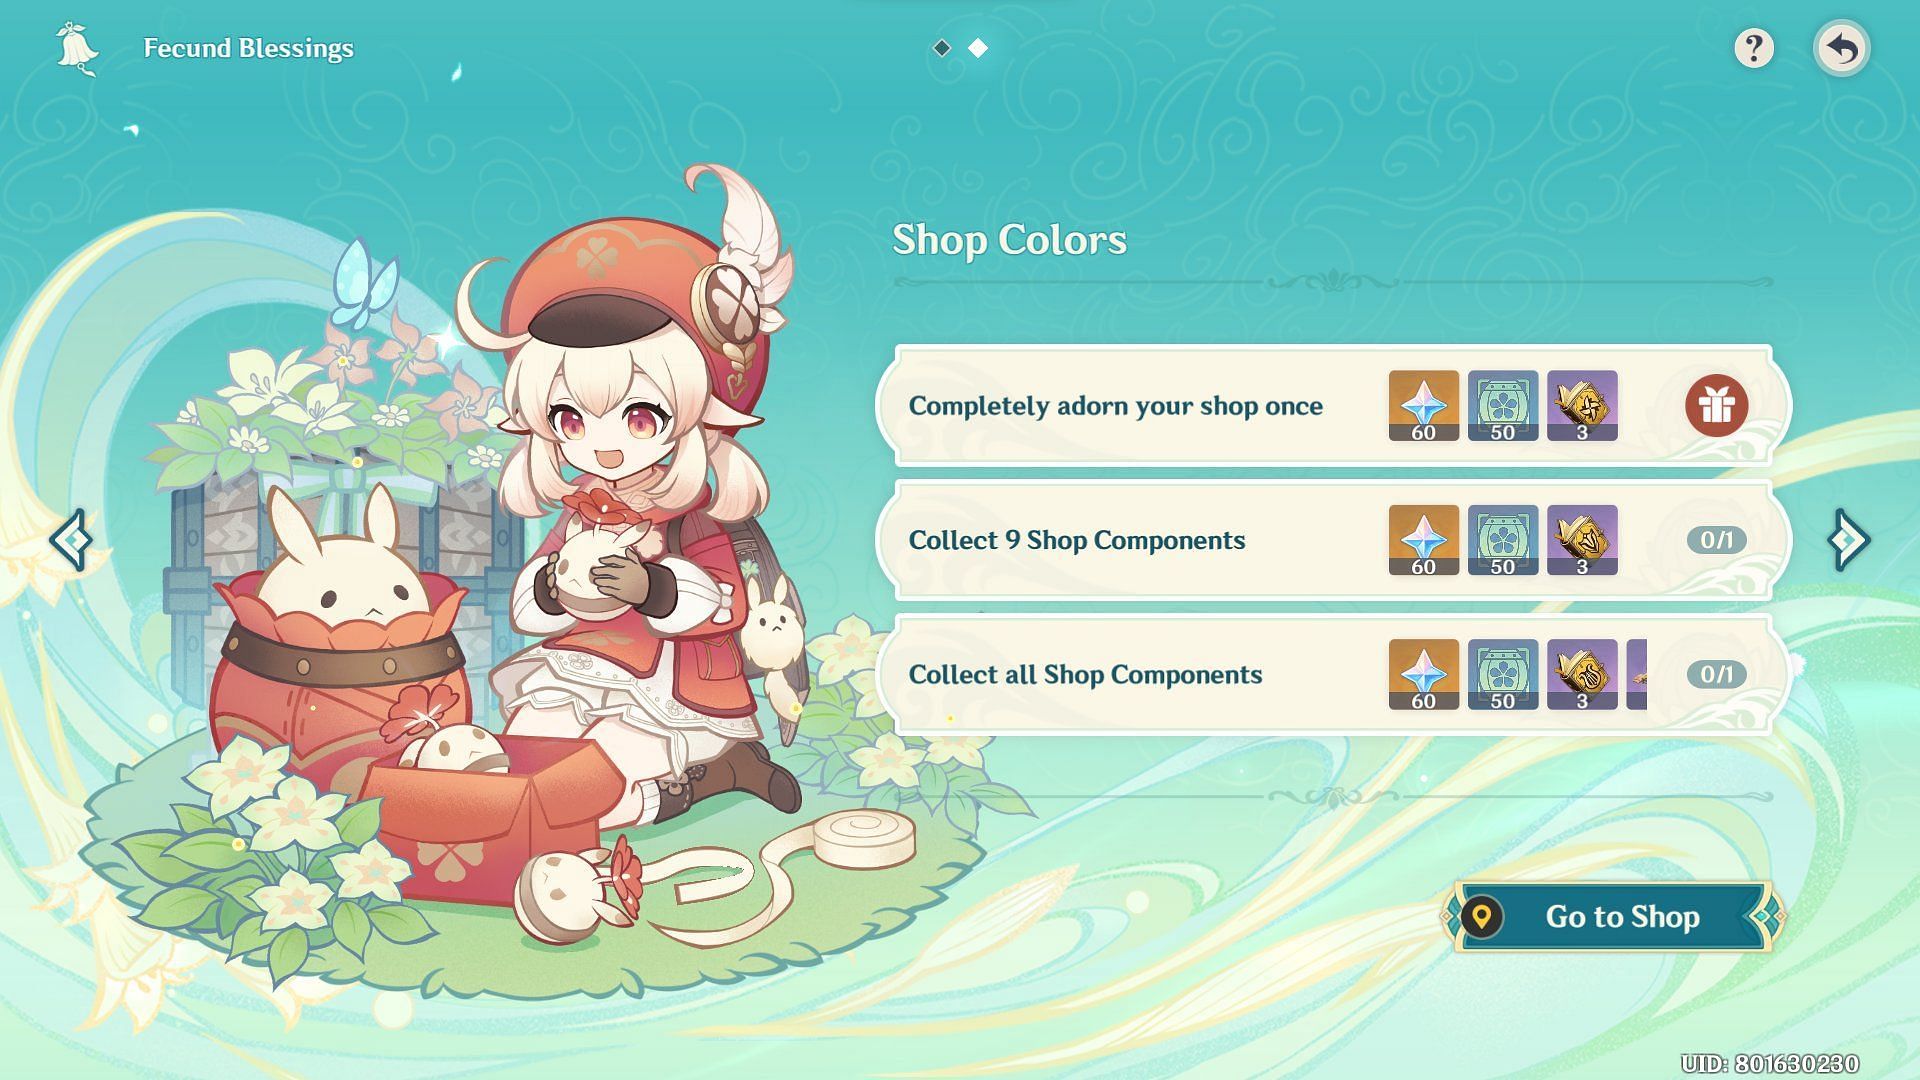 The Shop Colors event page (Image via Genshin Impact)